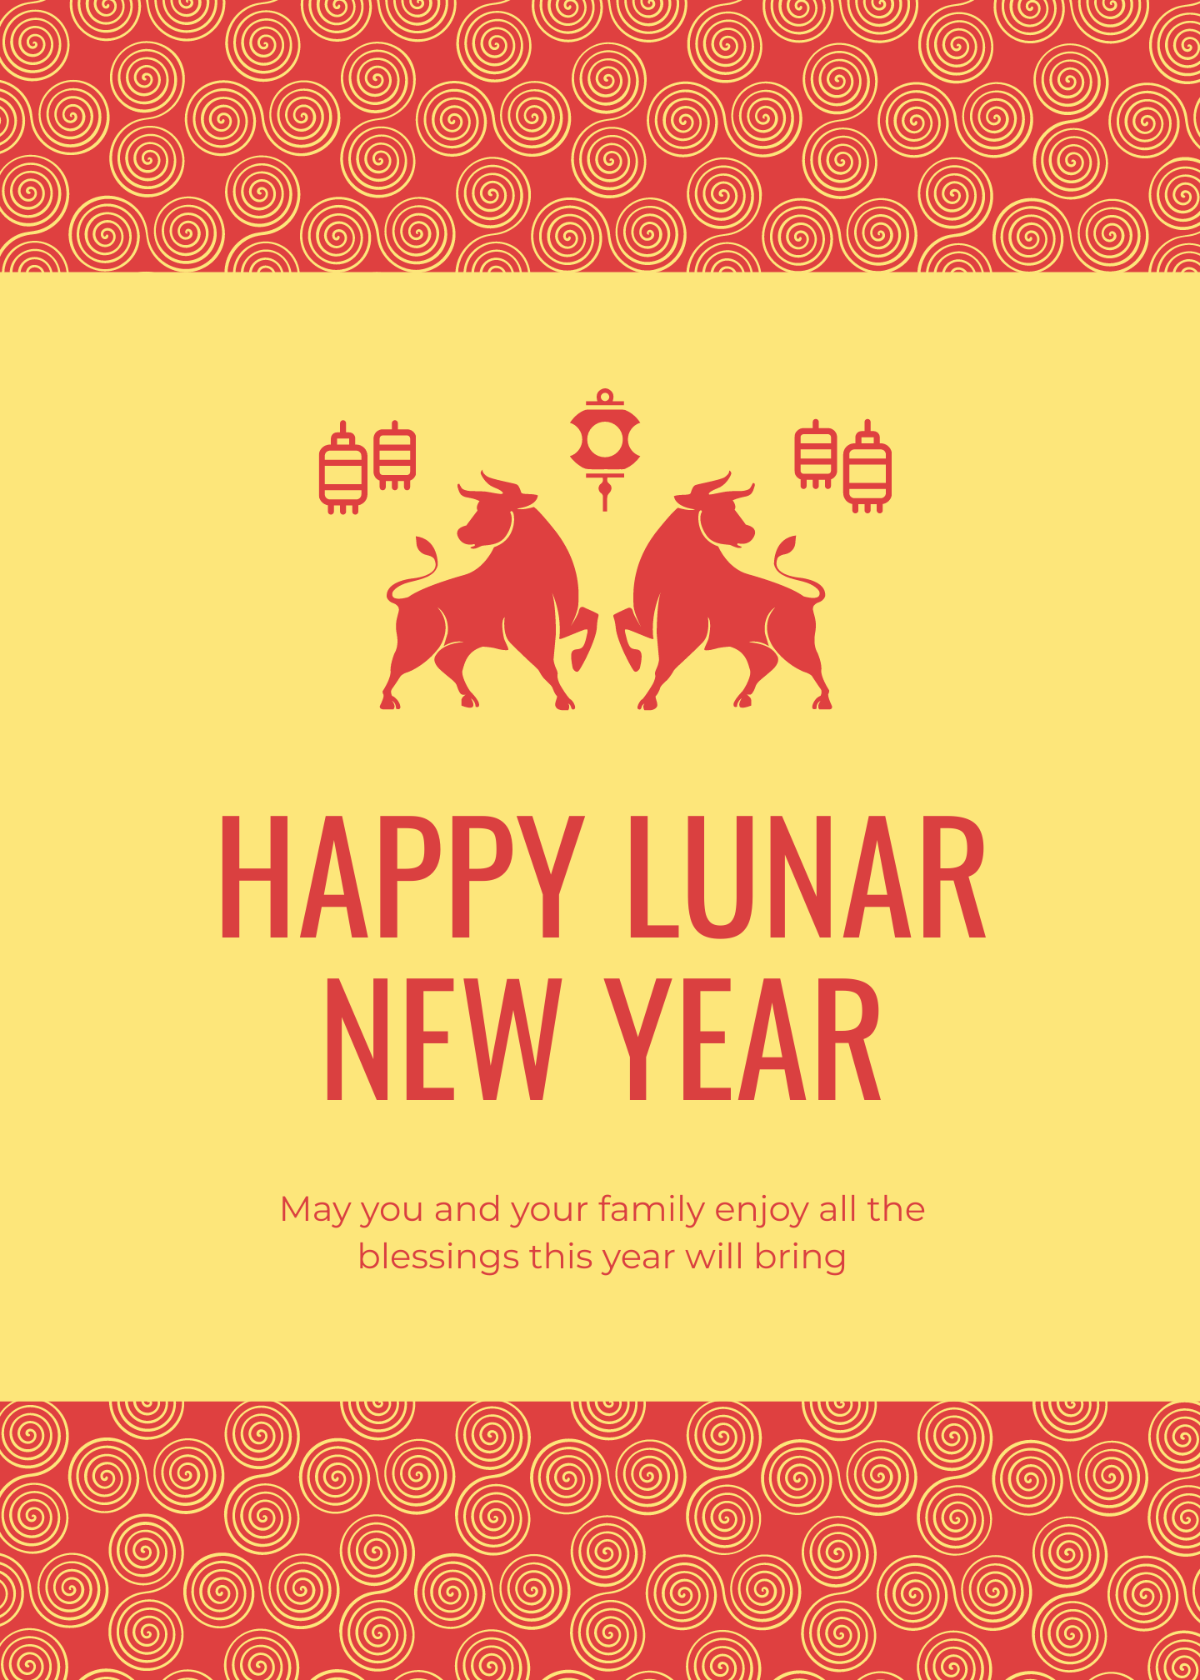 Lunar New Year Card Template